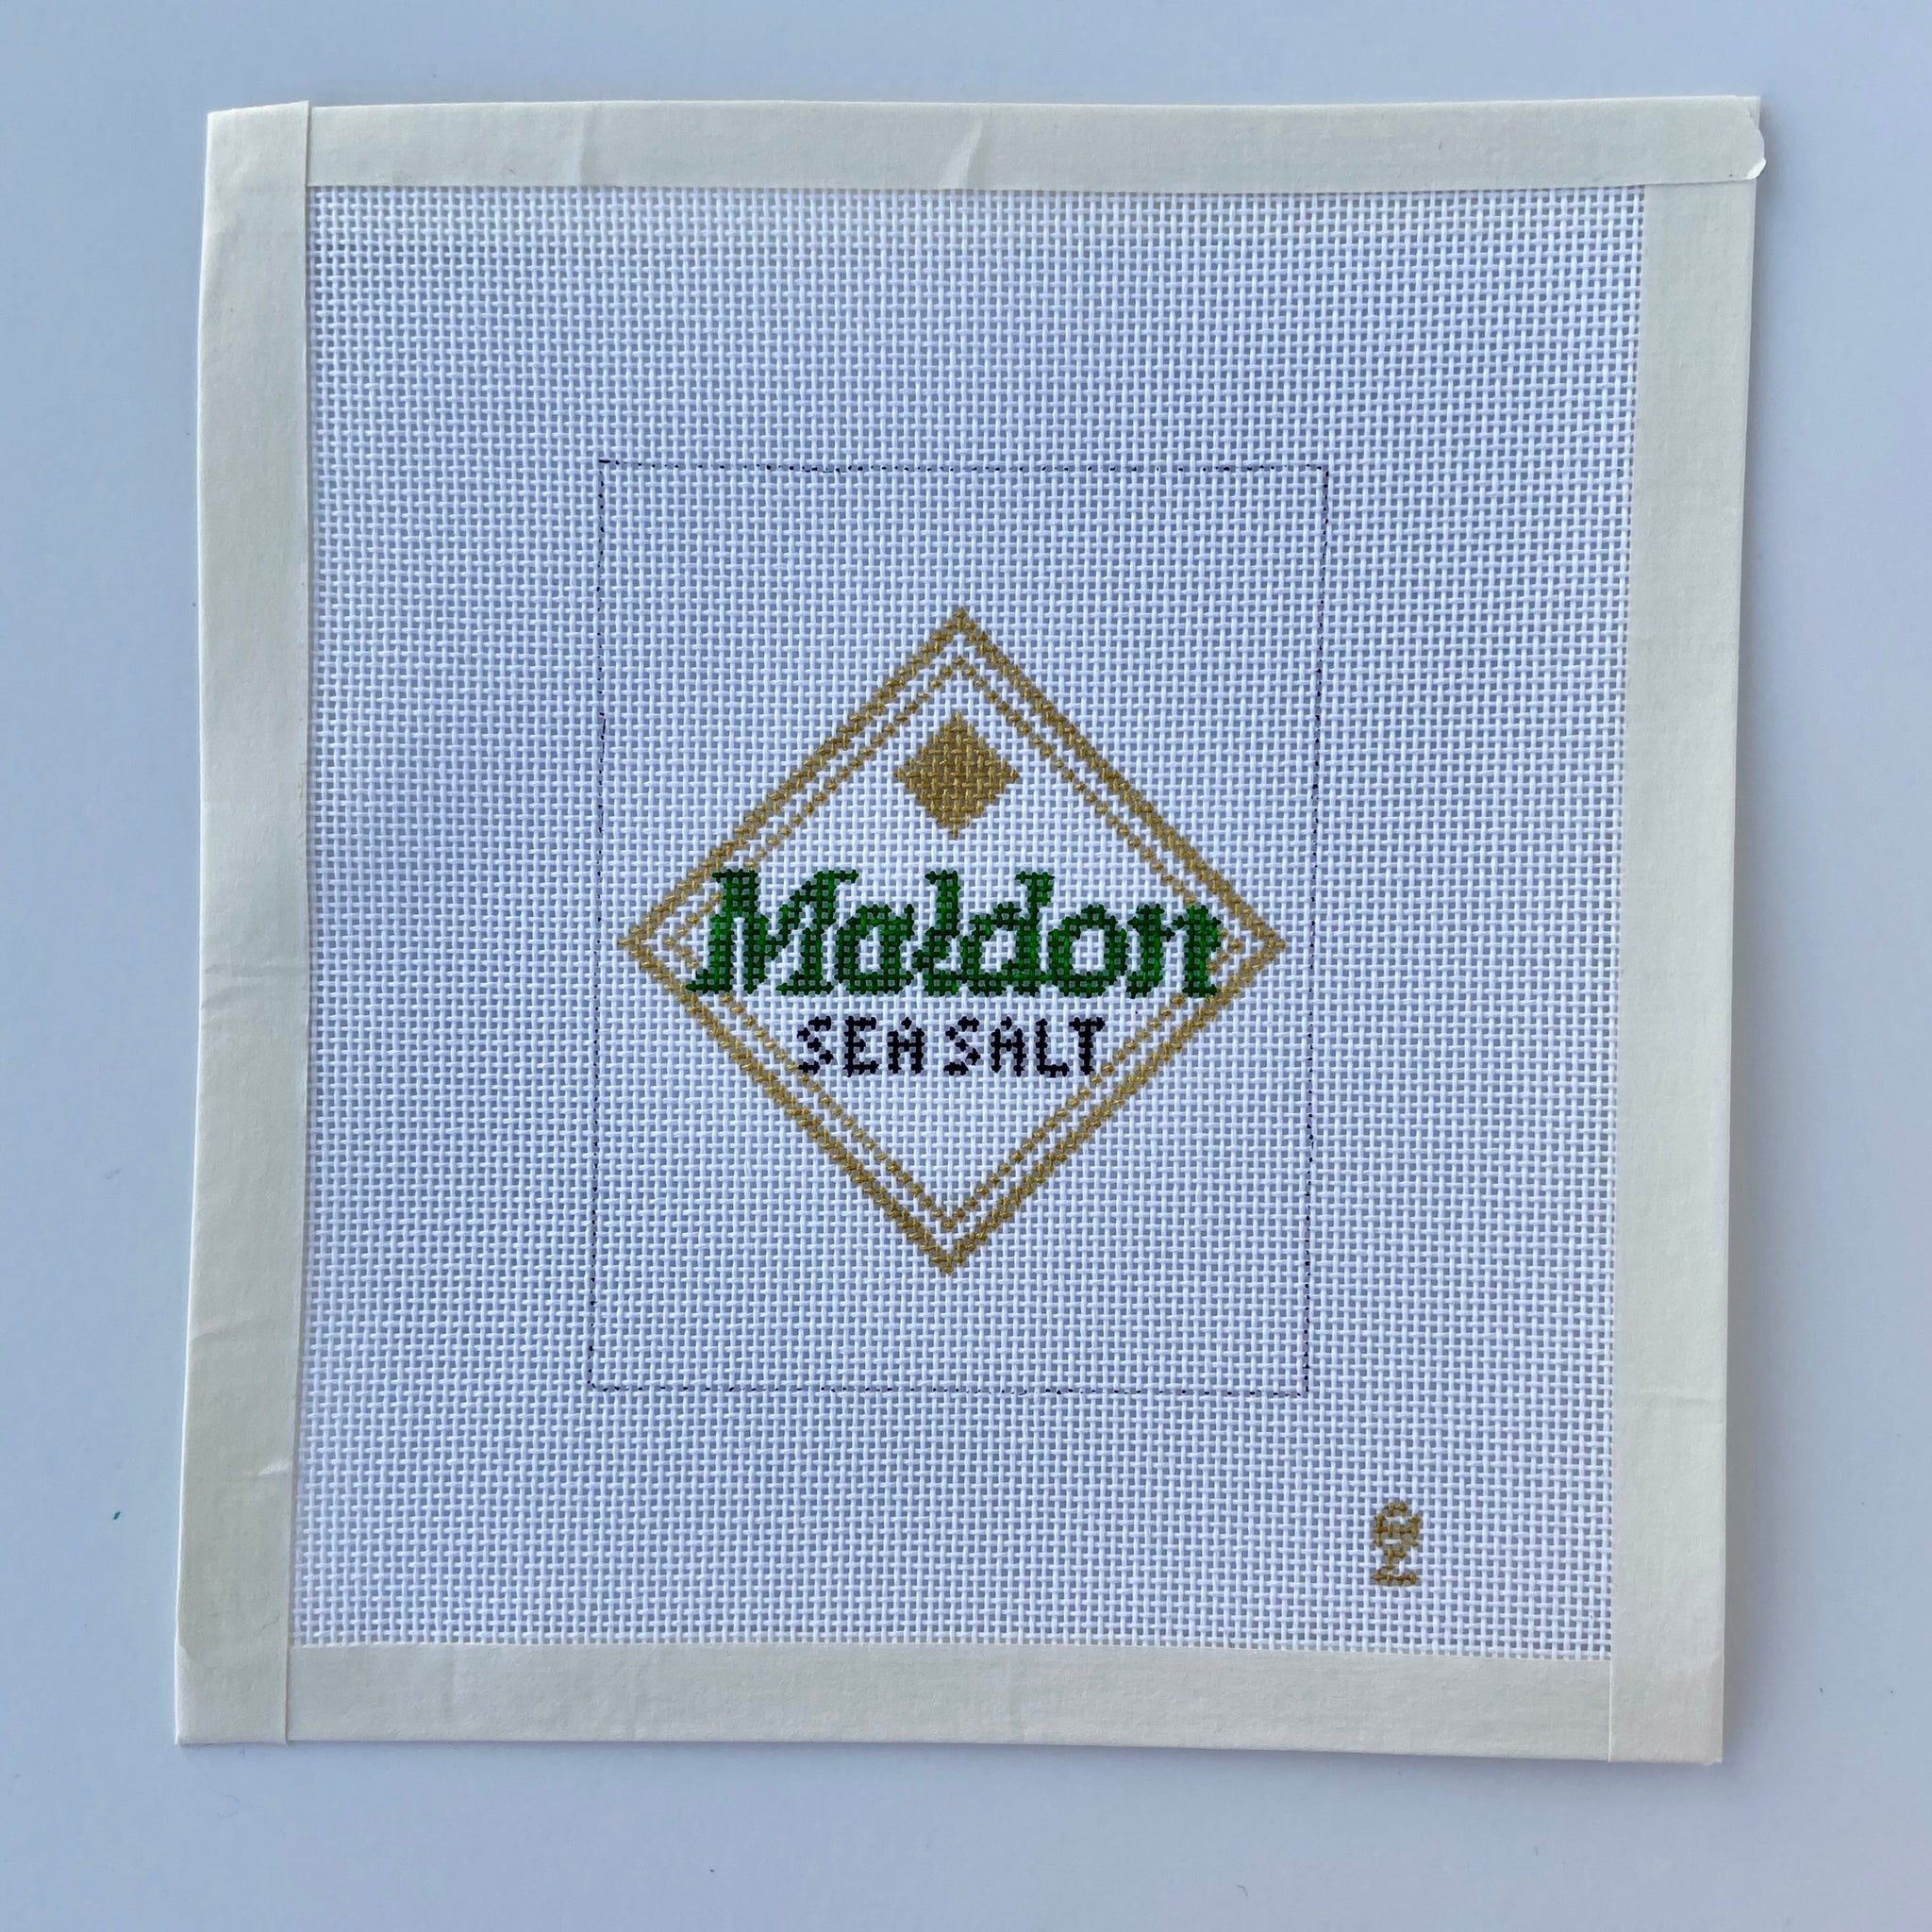 Maldon Needlepoint Canvas – Oz Needle and Thread